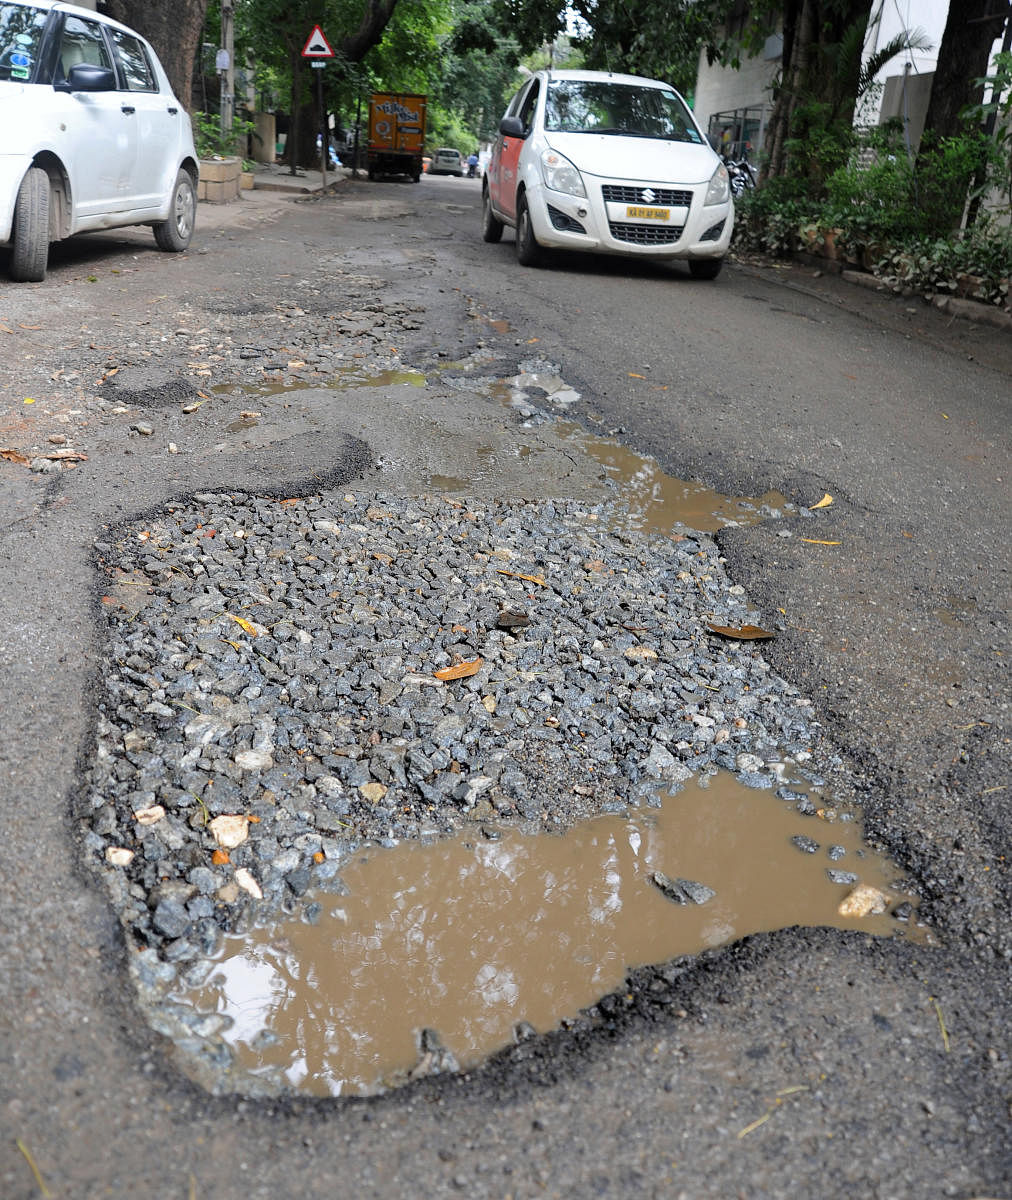 A pothole-ridden road in Indiranagar. (DH Photo)